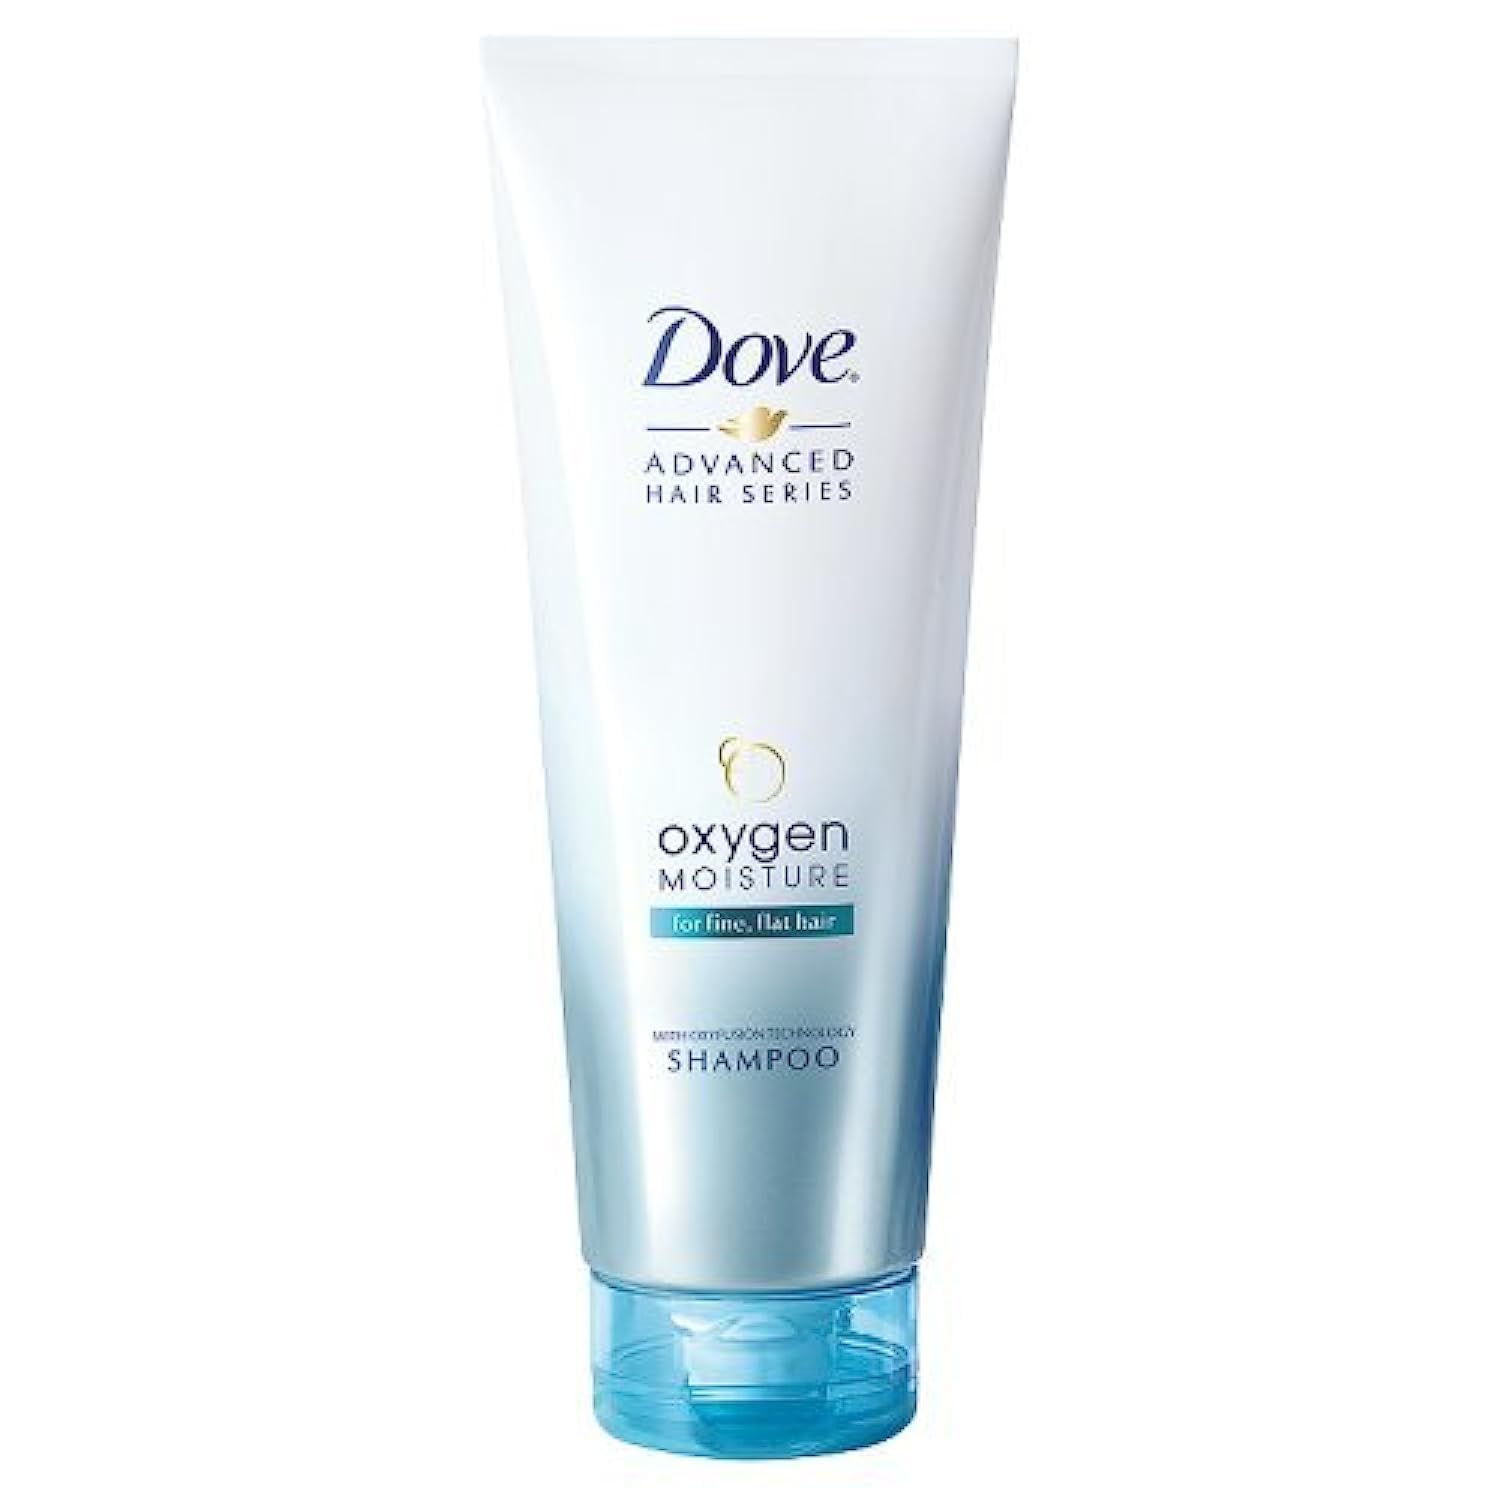 szampon dove advanced